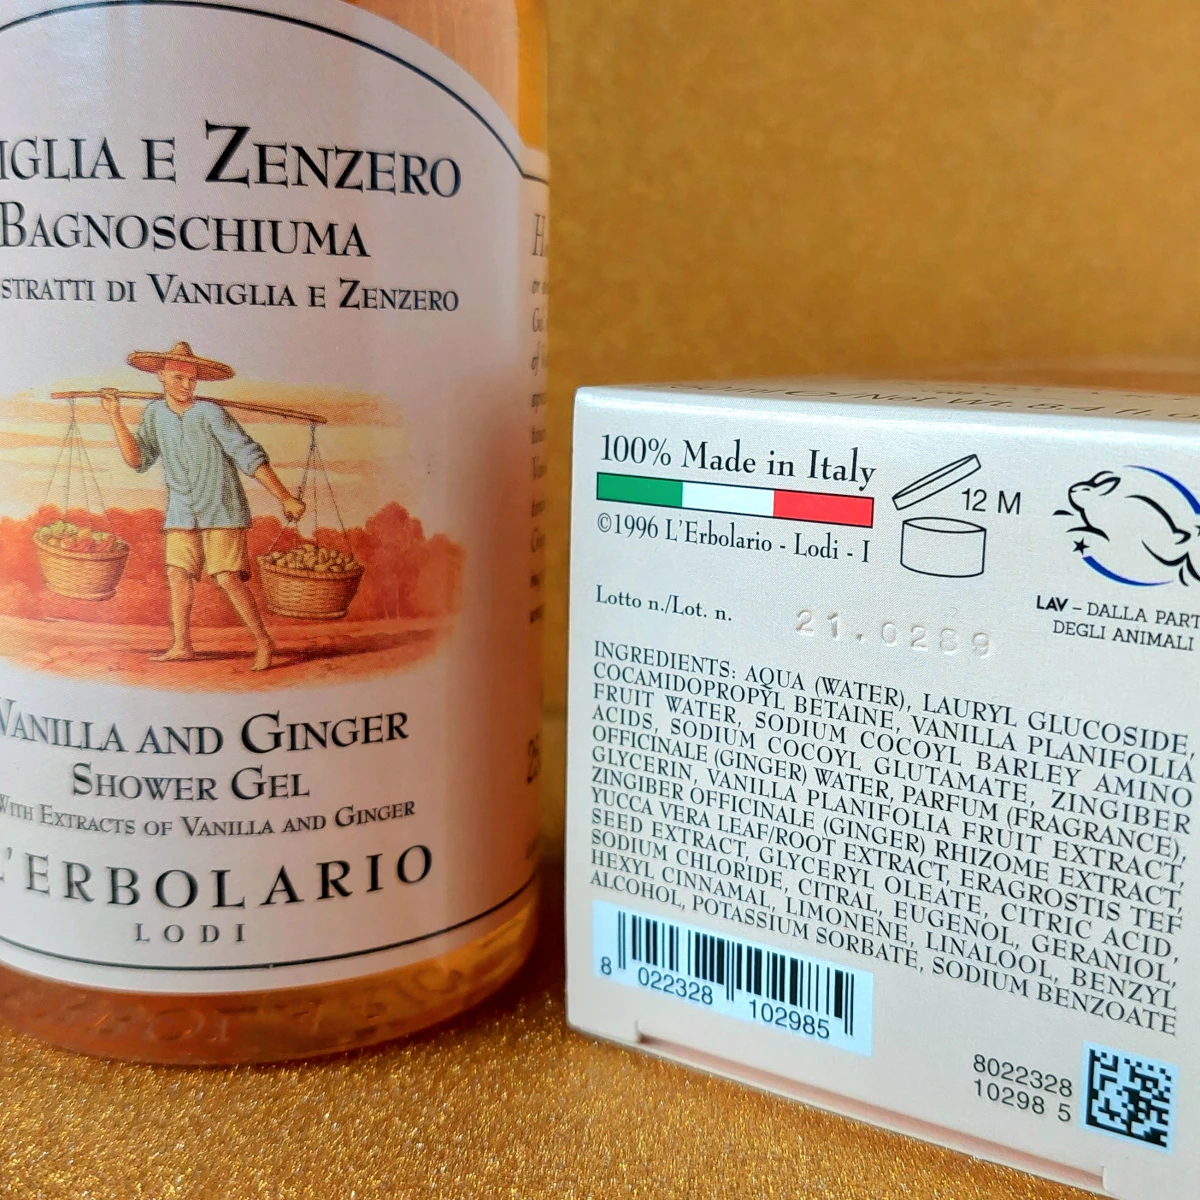 erbolario-vaniglia-zenzero-bagnosciuma-inci